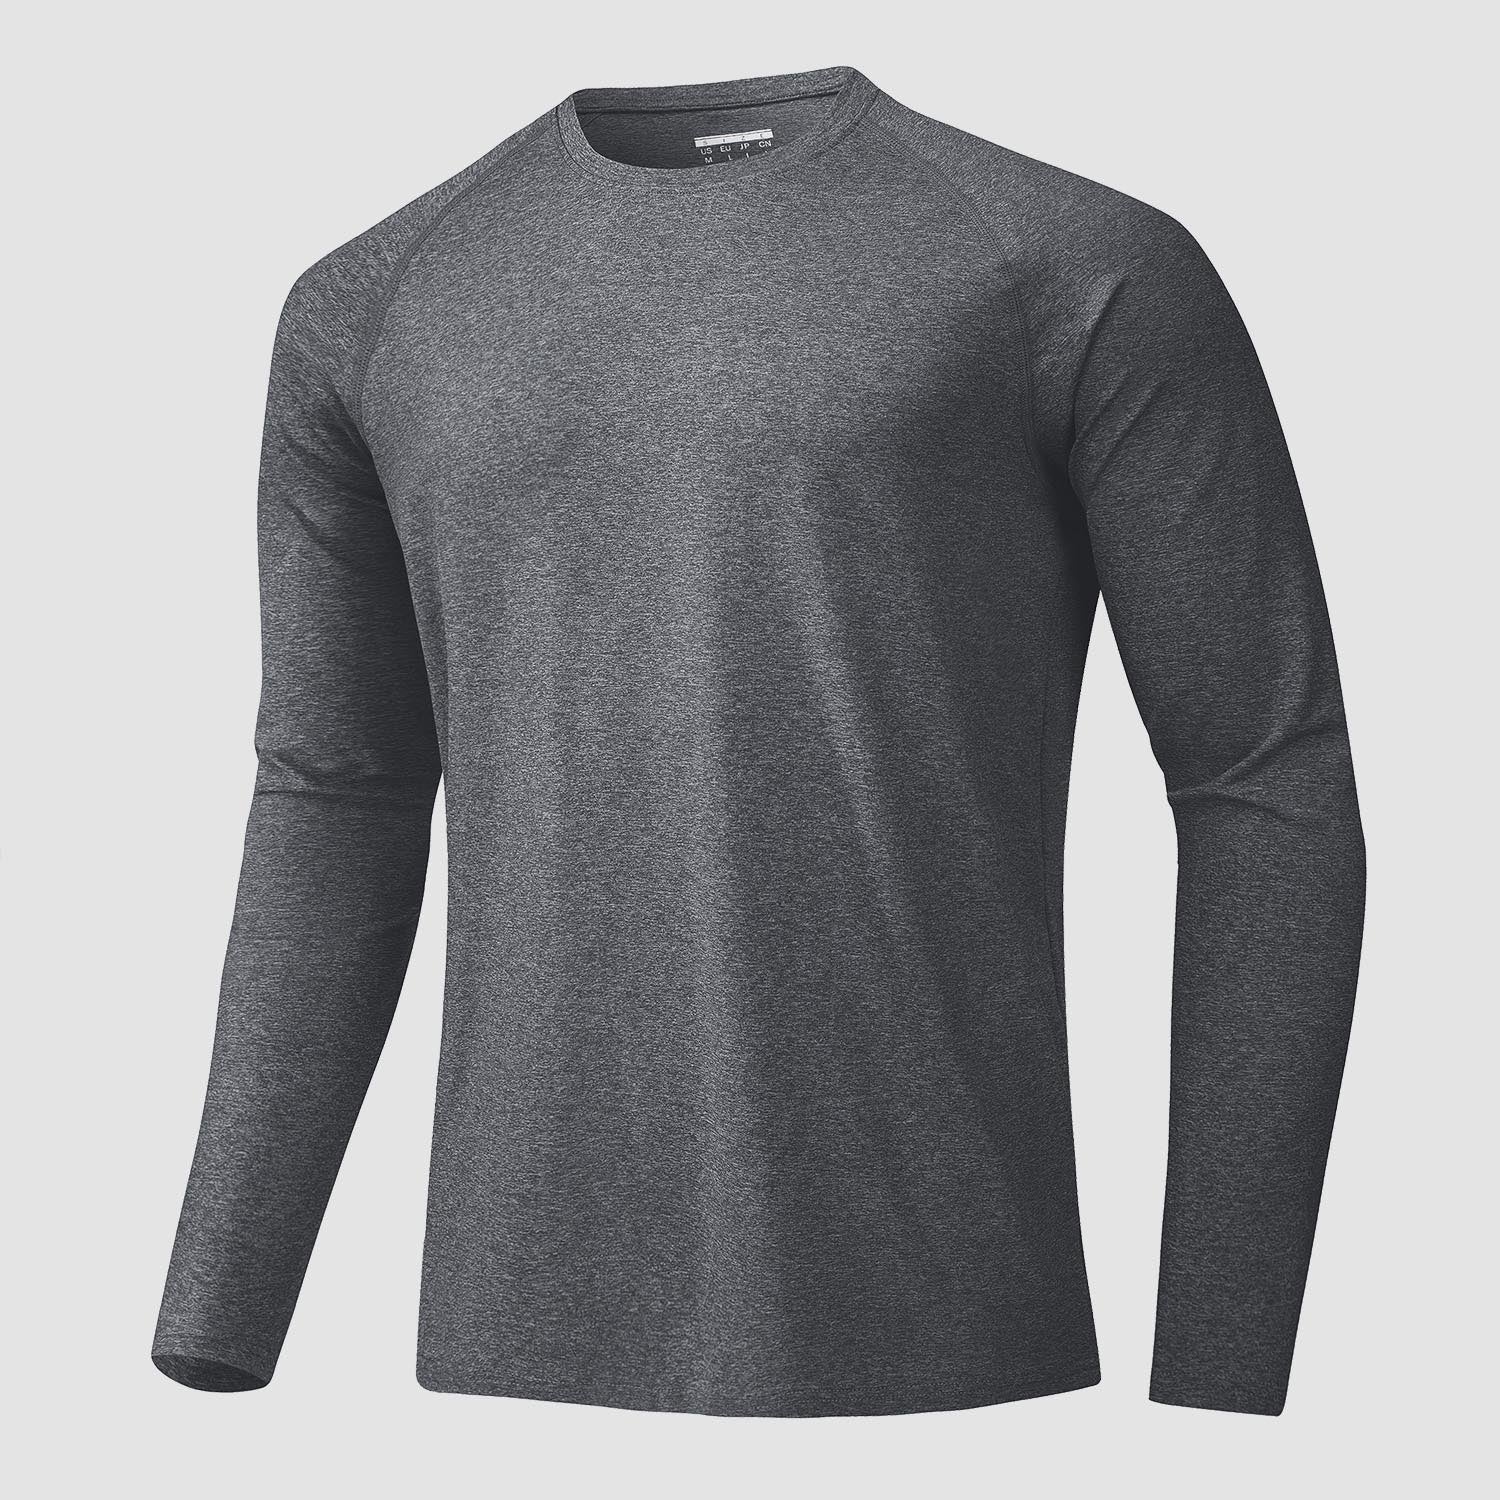 Men's Long Sleeve Shirts UPF 50+ UV Sun Protection Athletic Shirts for Hiking Running Workout Rash Guard